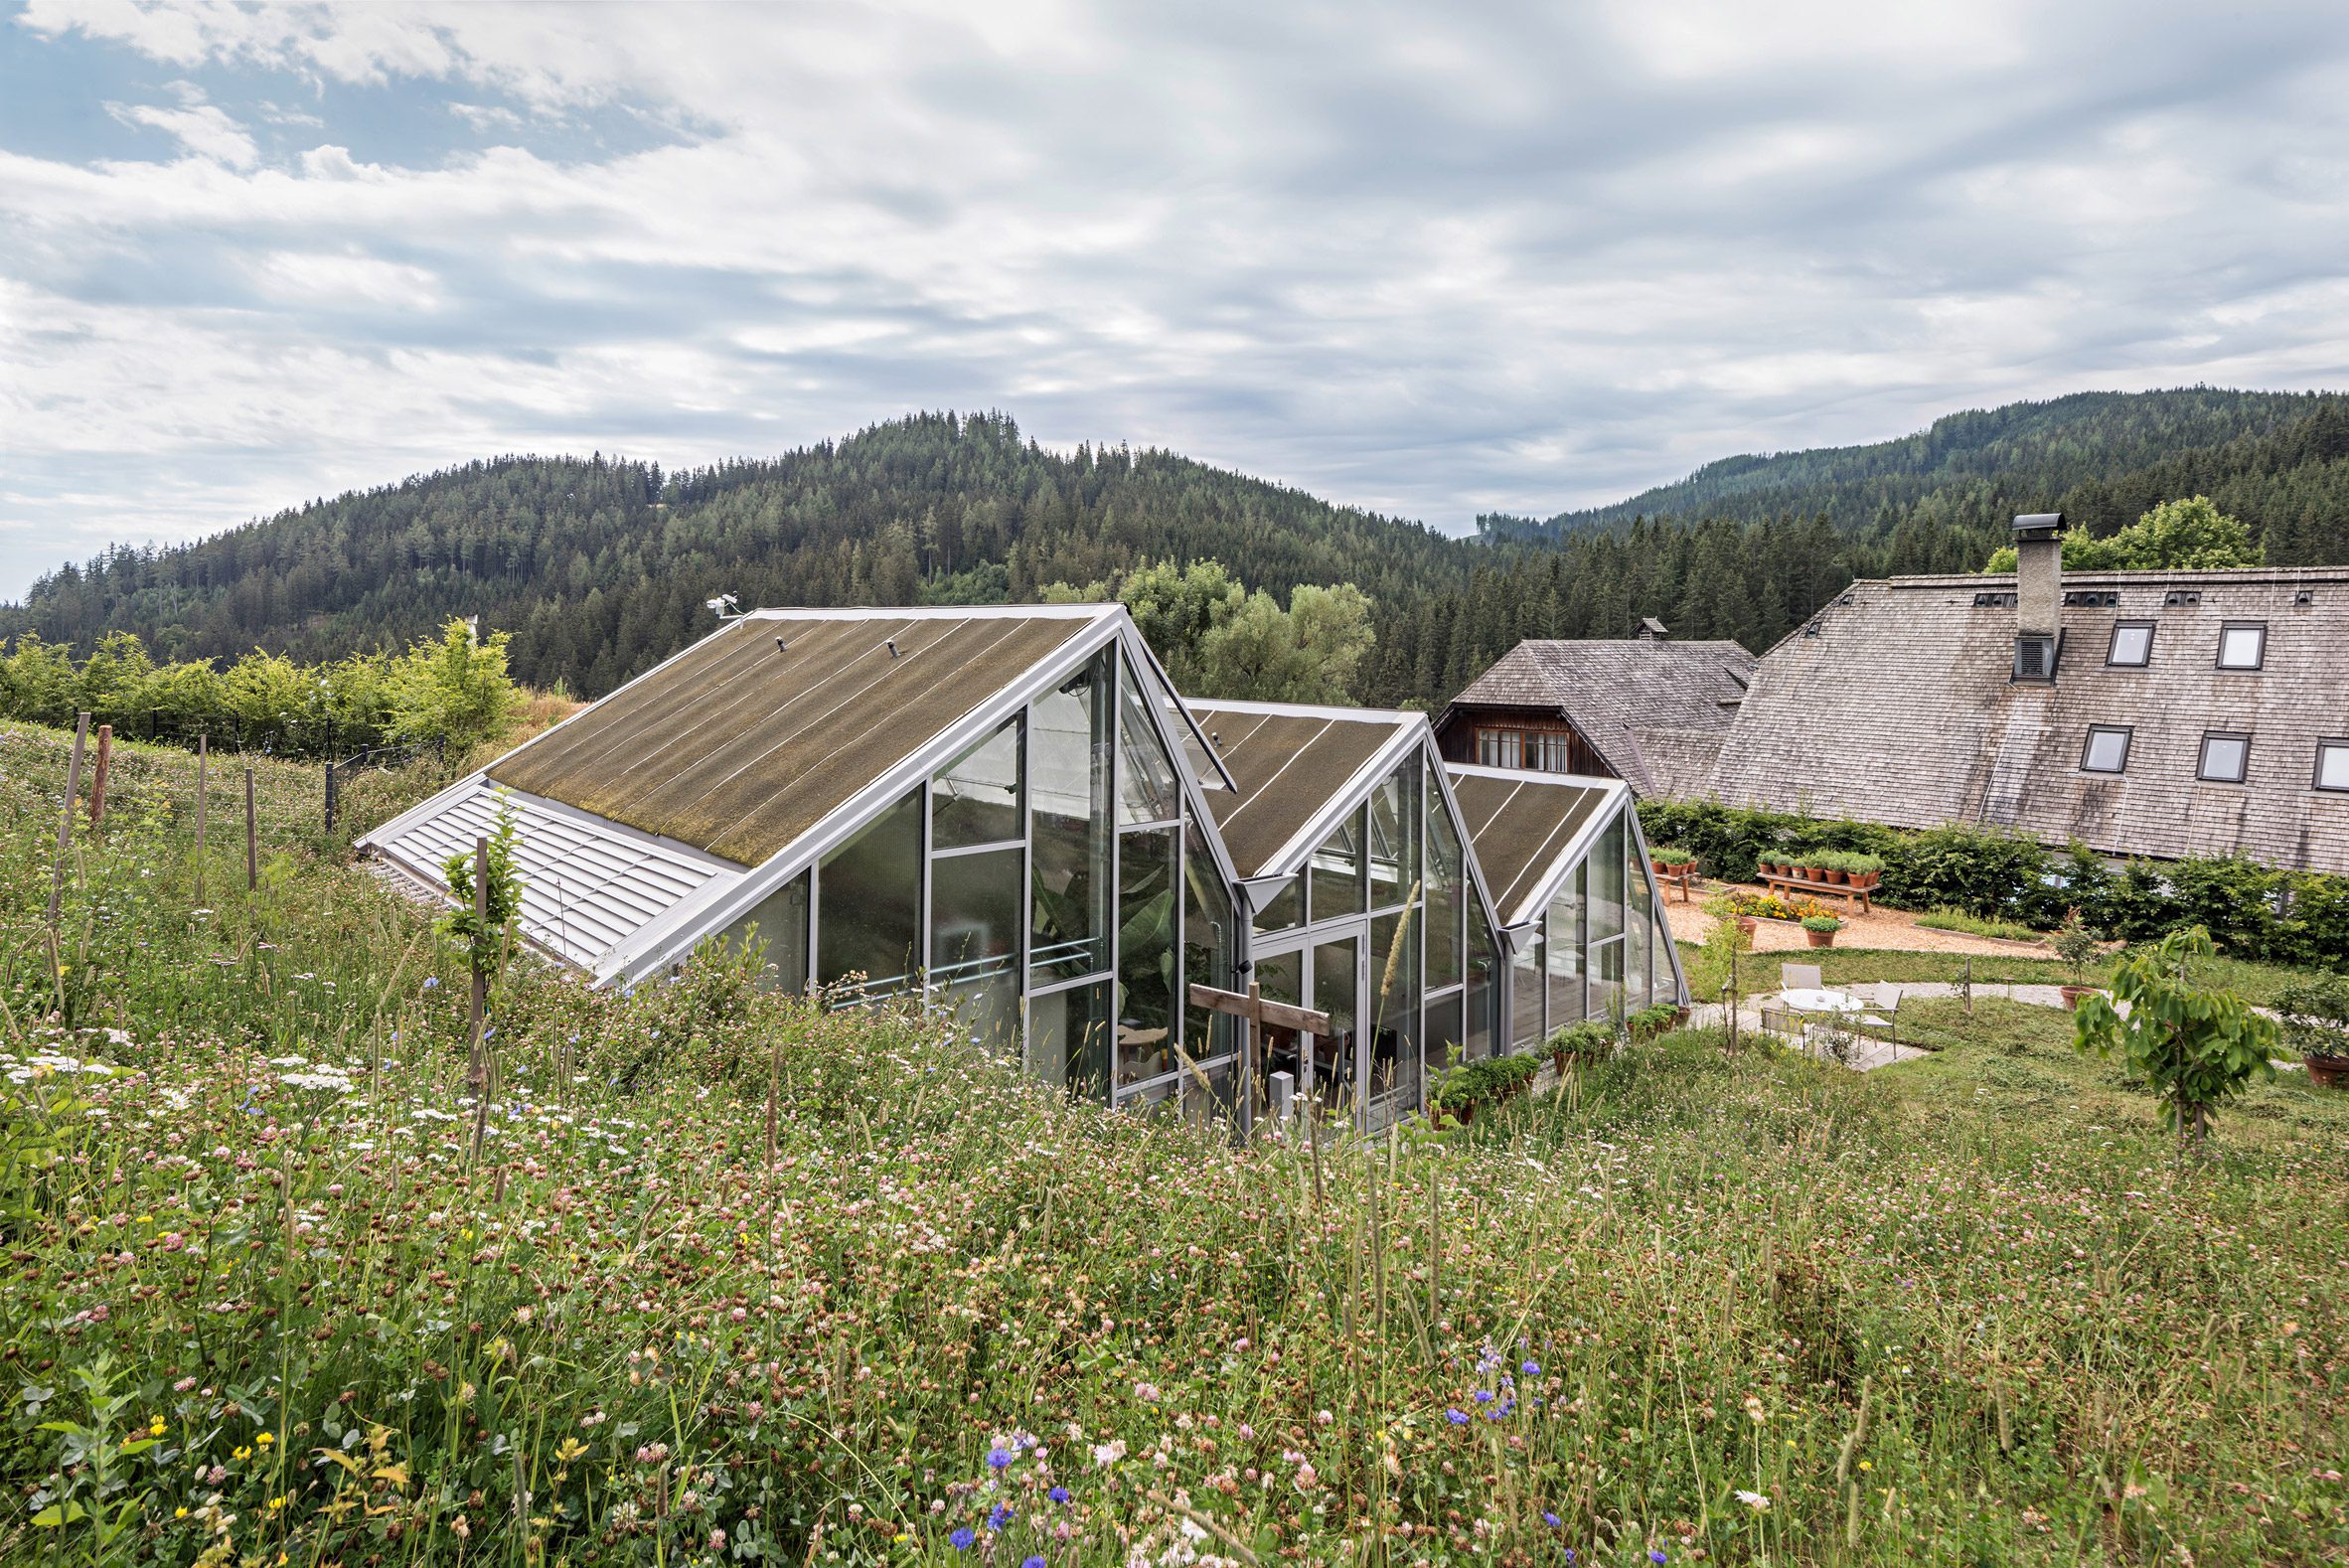 PPAG建筑师事务所为奥地利山坡餐厅增添建筑“村庄”|ART-Arrakis | 建筑室内设计的创新与灵感